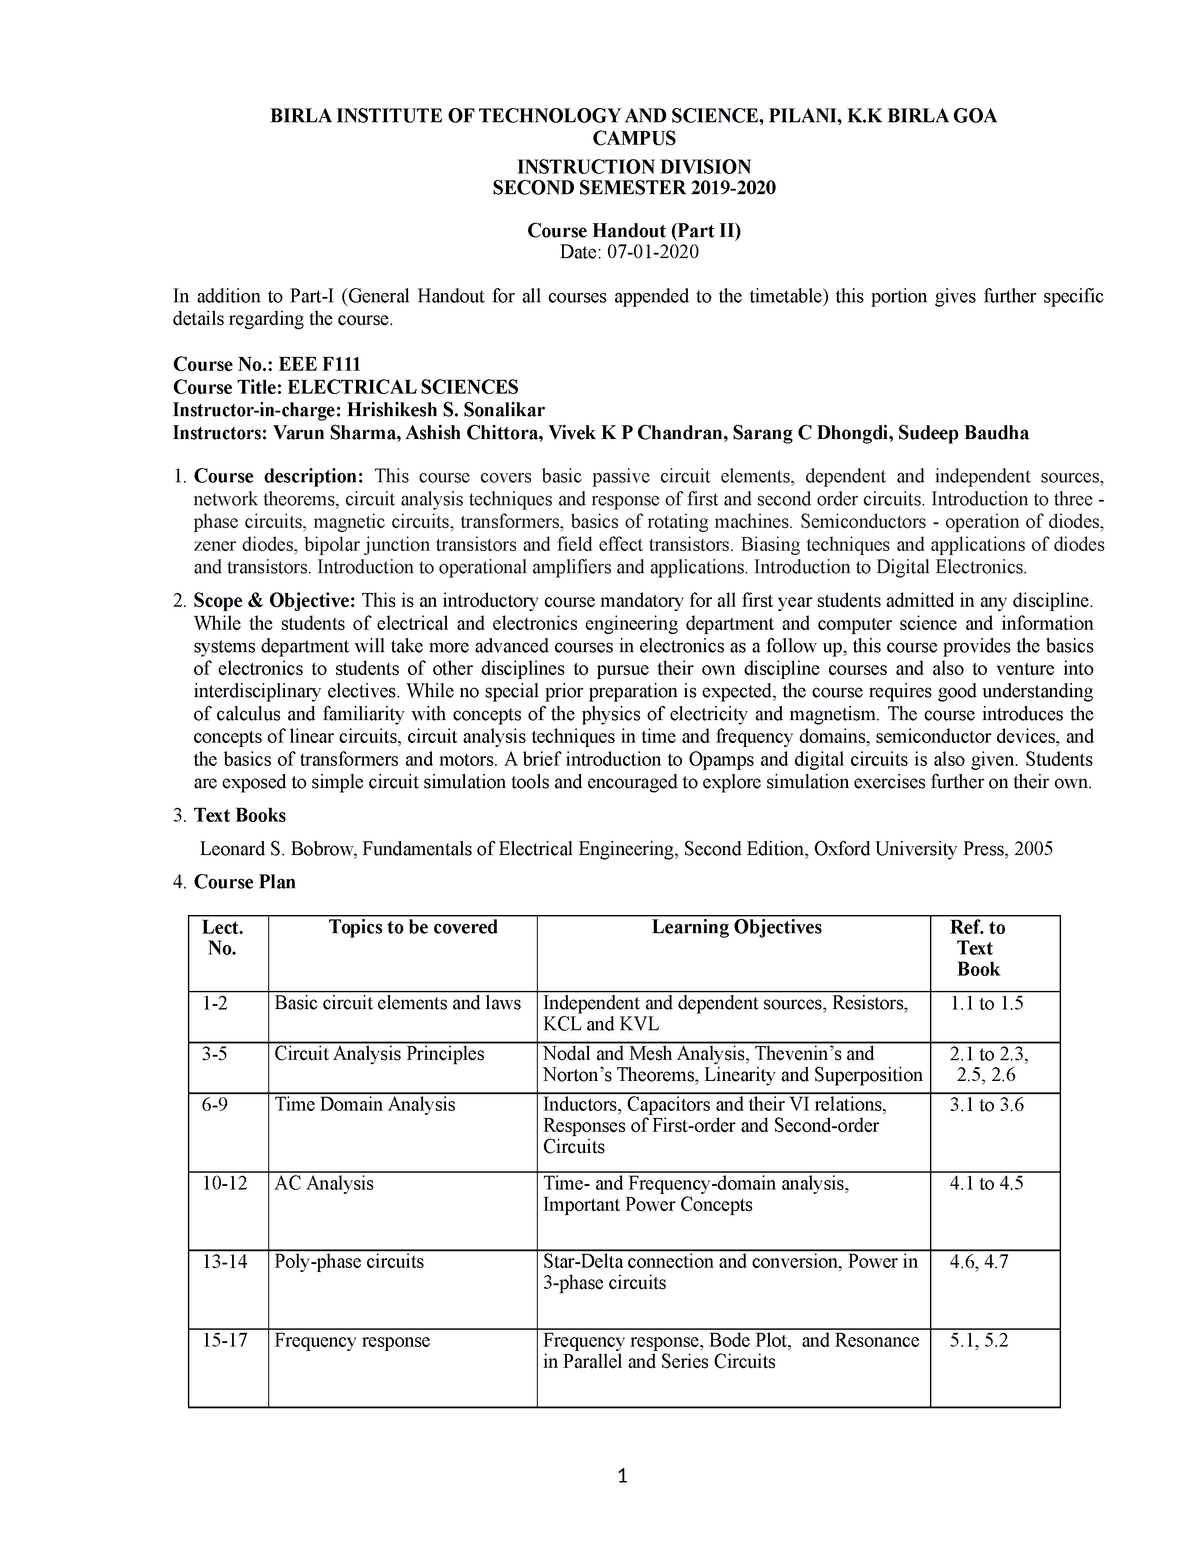 fundamentals of electrical engineering leonard s bobrow pdf